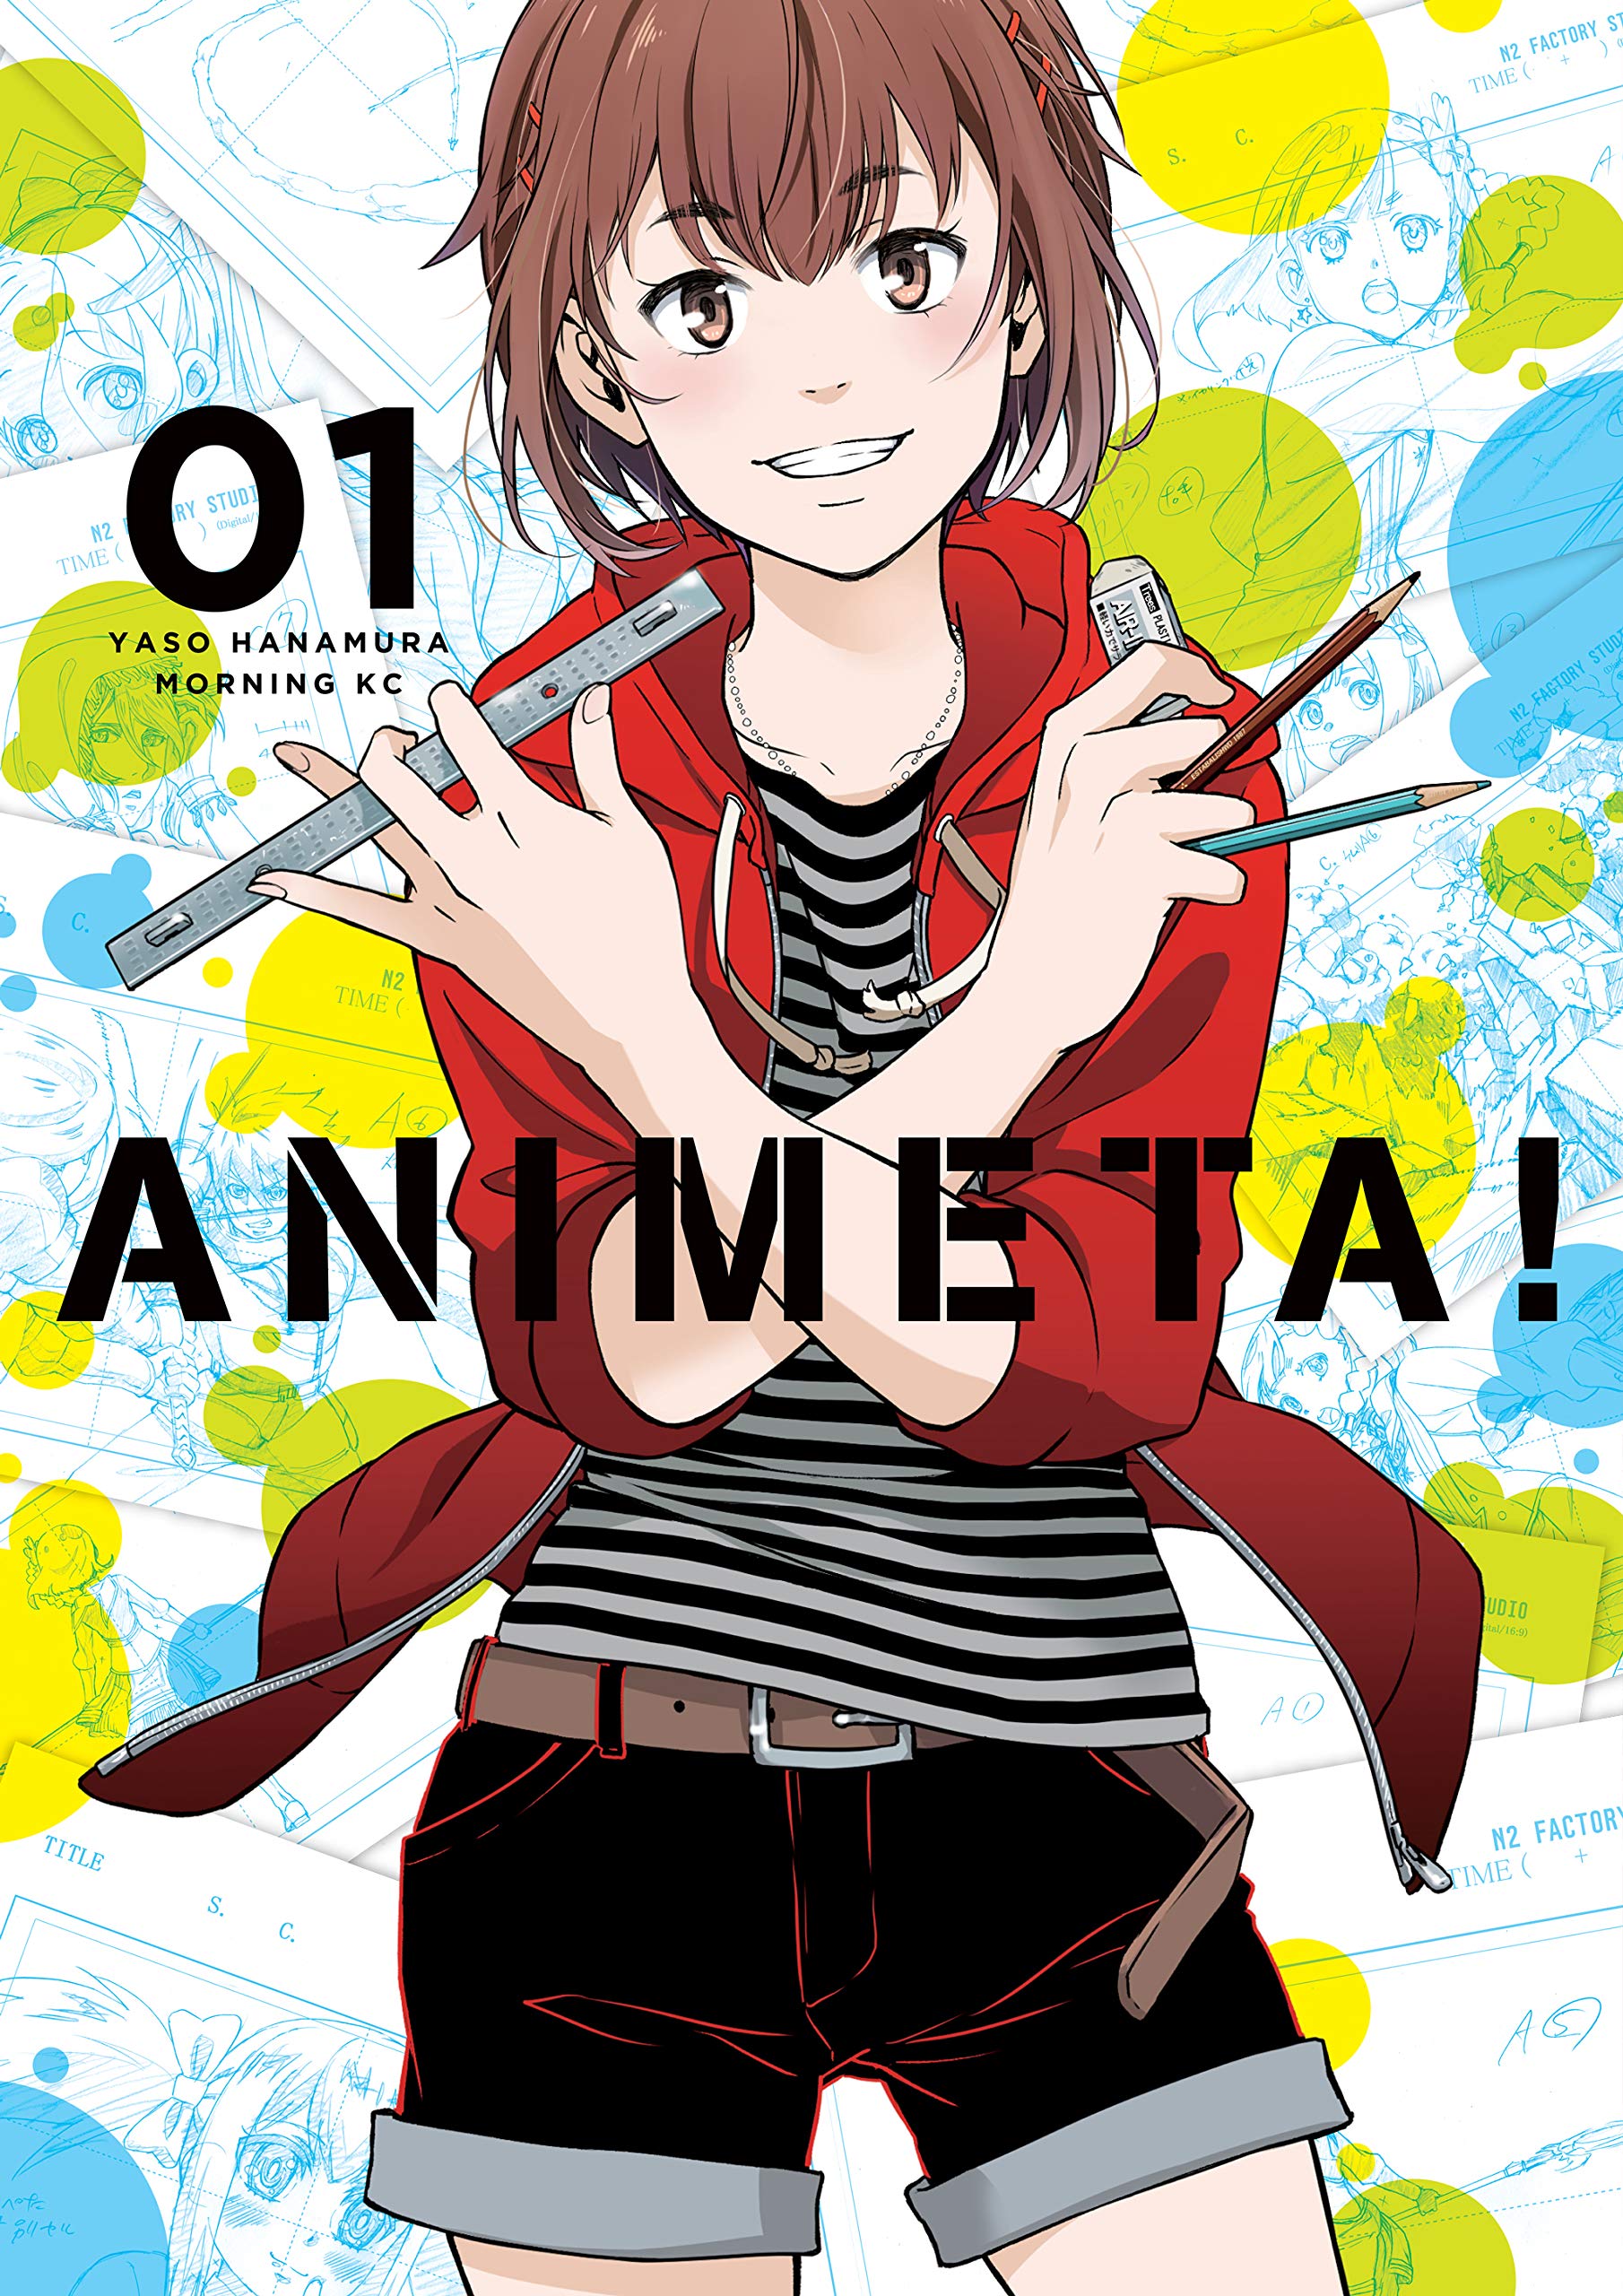 Animeta! Volume 1 | Yaso Hanamura